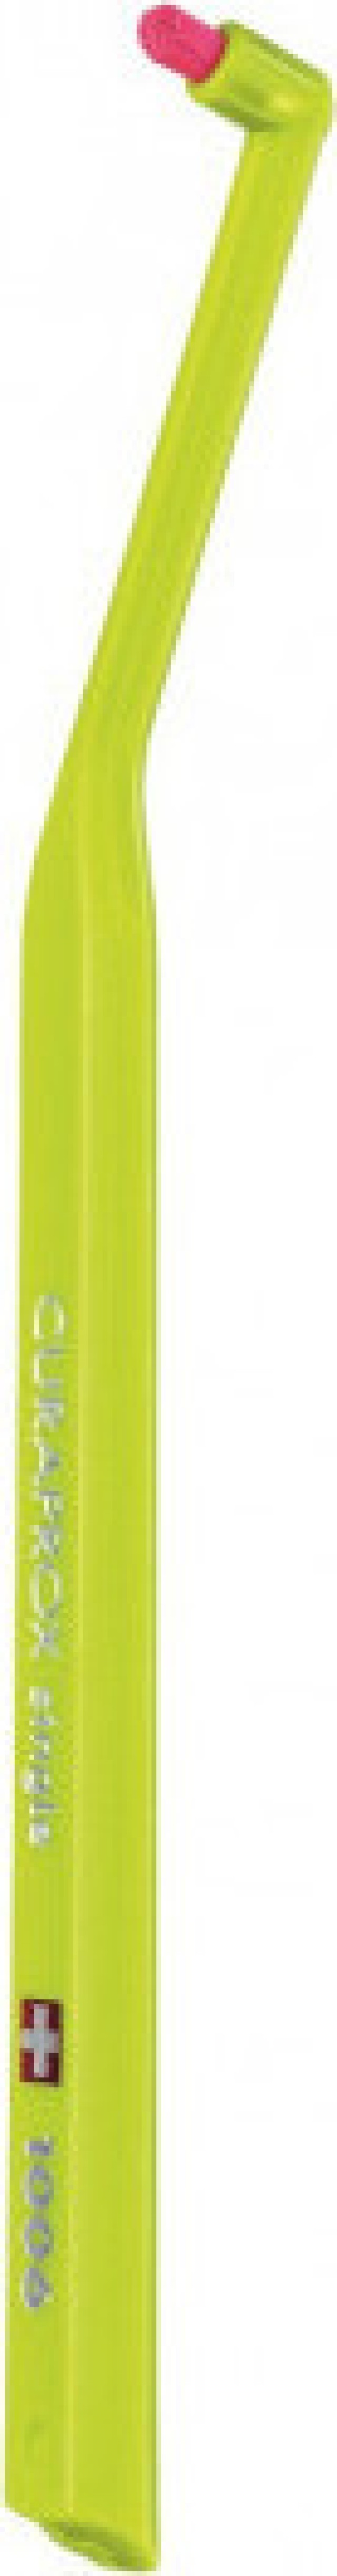 Curaprox CS 1006 Single Ειδική Οδοντόβουρτσα για Σιδεράκια και Εμφυτεύματα Χρώμα:Λαχανί 1 Τεμάχιο